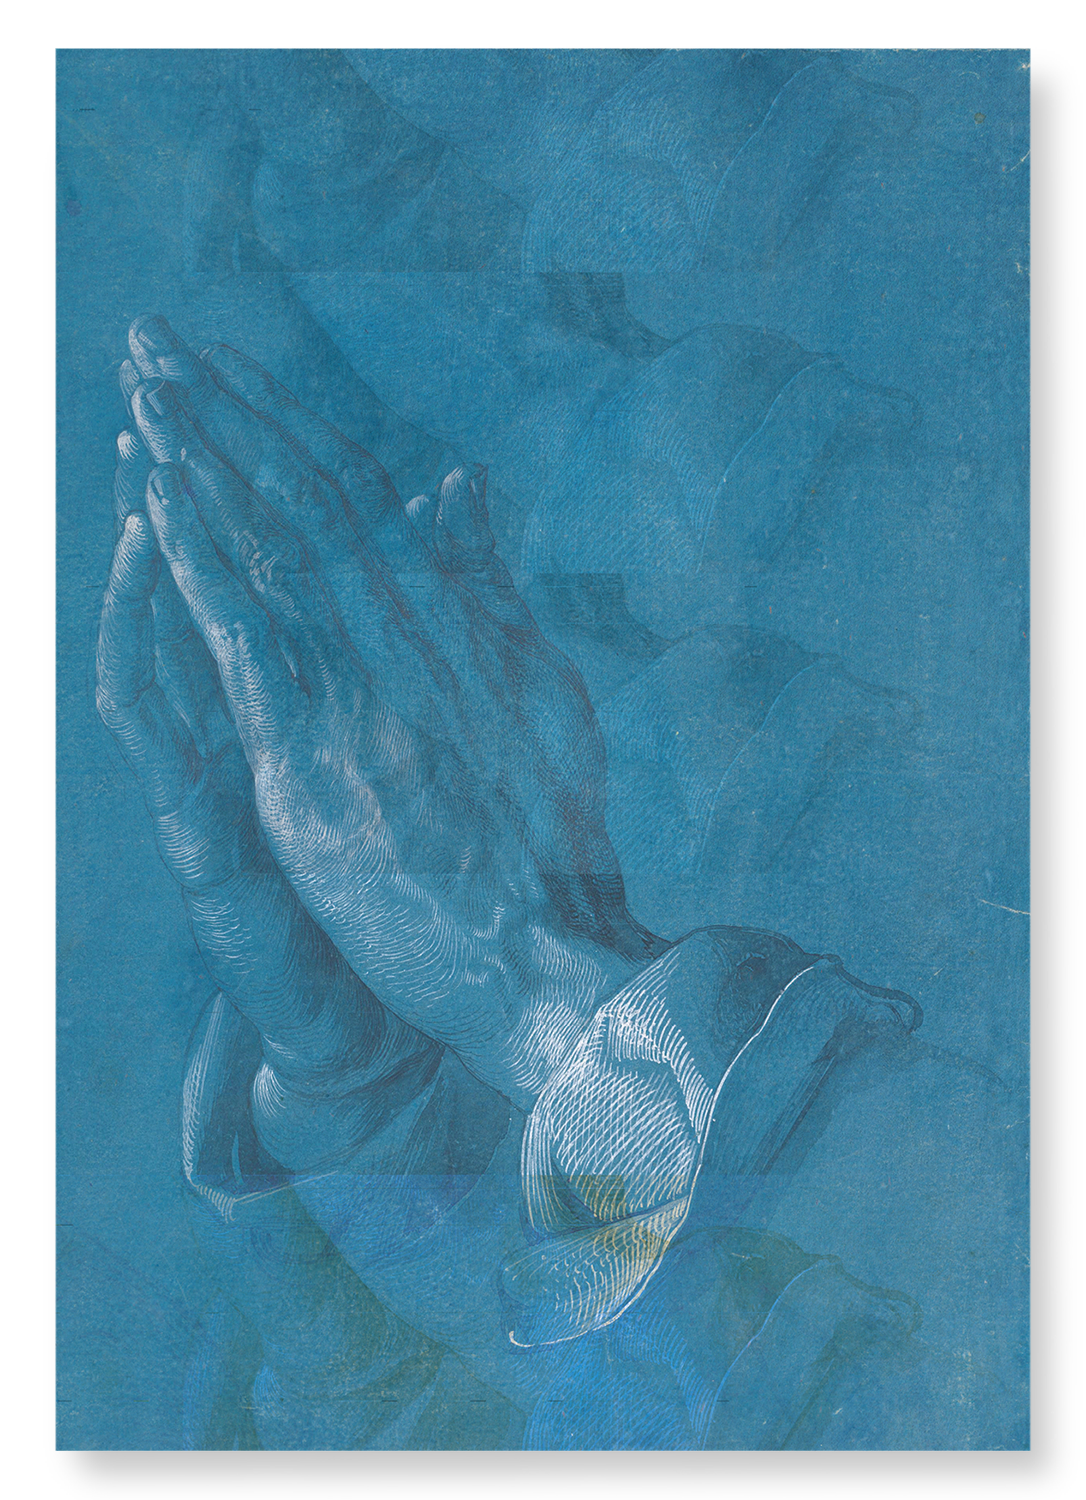 PRAYING HANDS: Painting Art Print